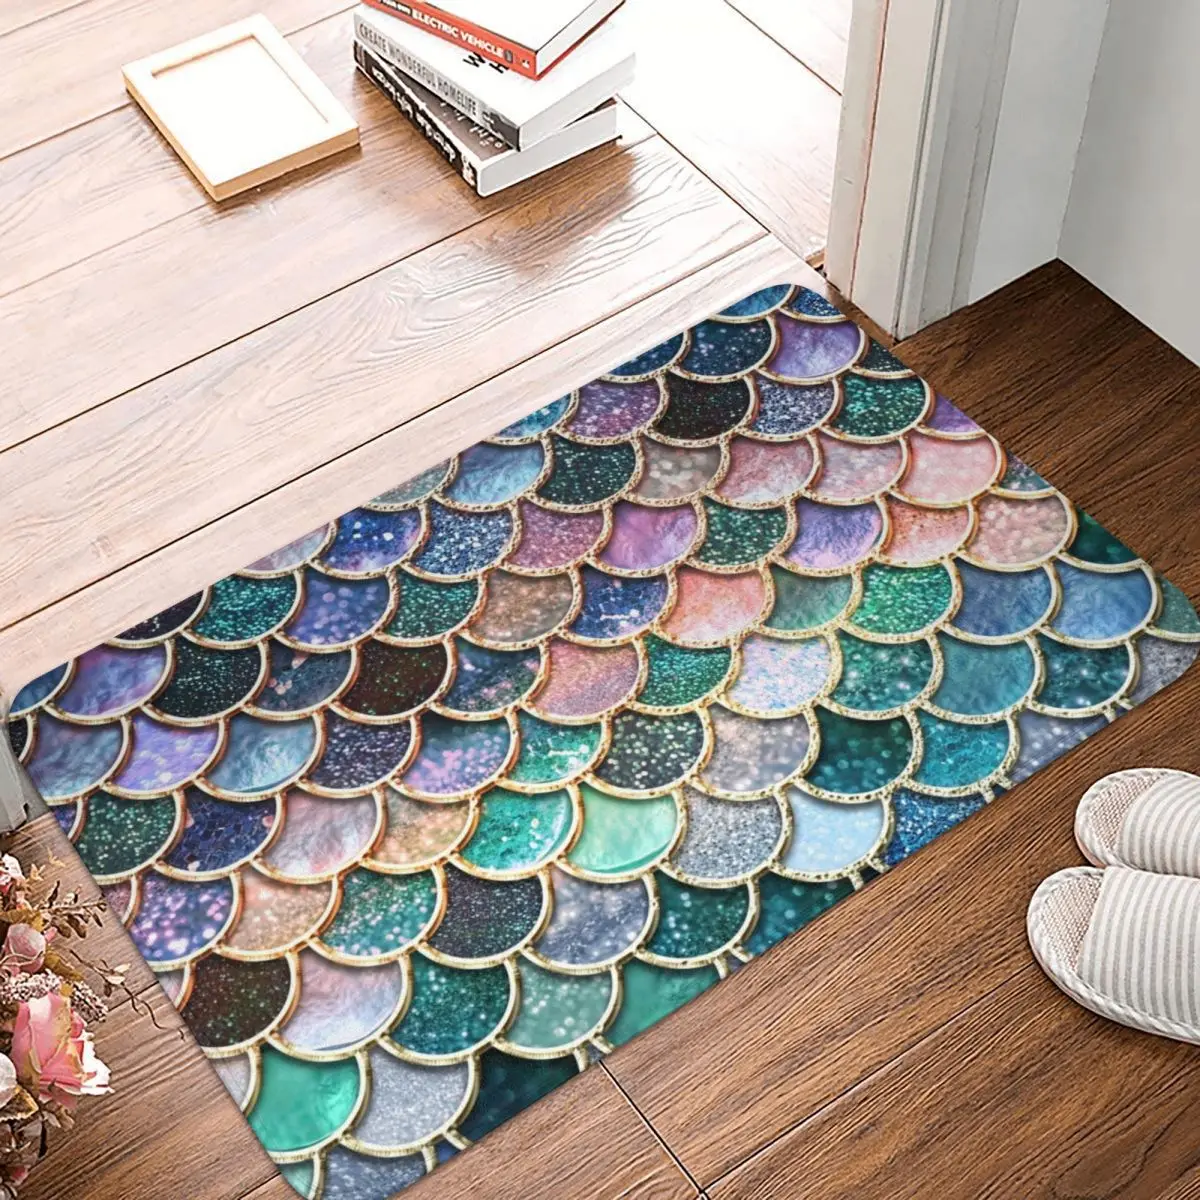 Teal Silver And Pink Glitter Mermaid Scales Doormat Carpet Mat Rug Polyester PVC Anti-slip Floor Decor Bath Bathroom Kitchen